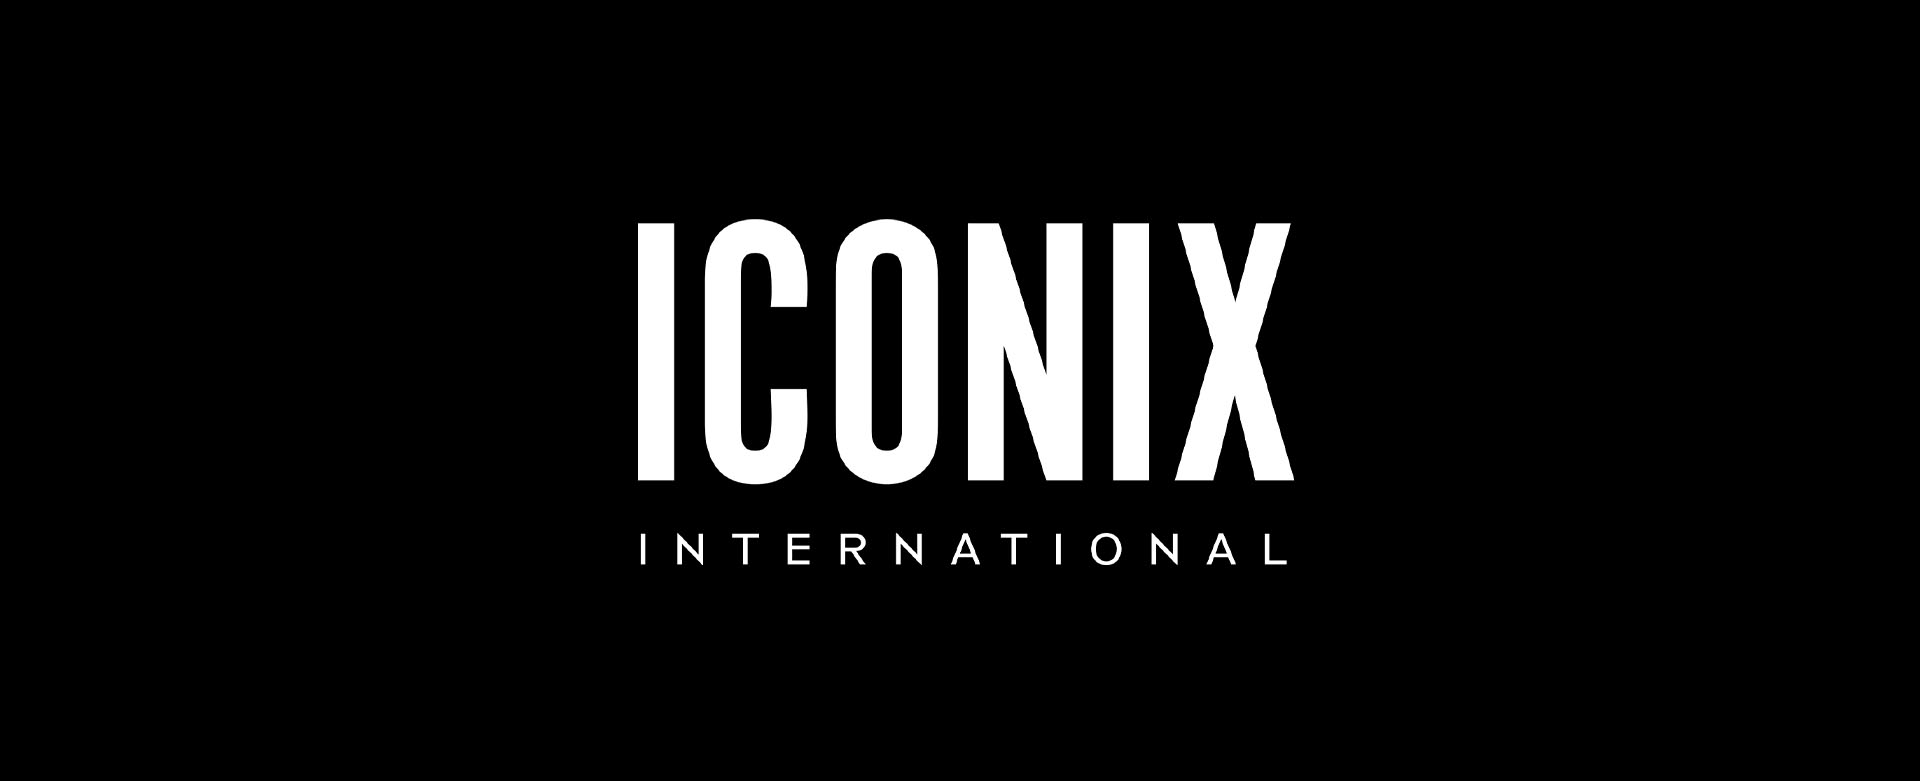 danskin – Iconix International